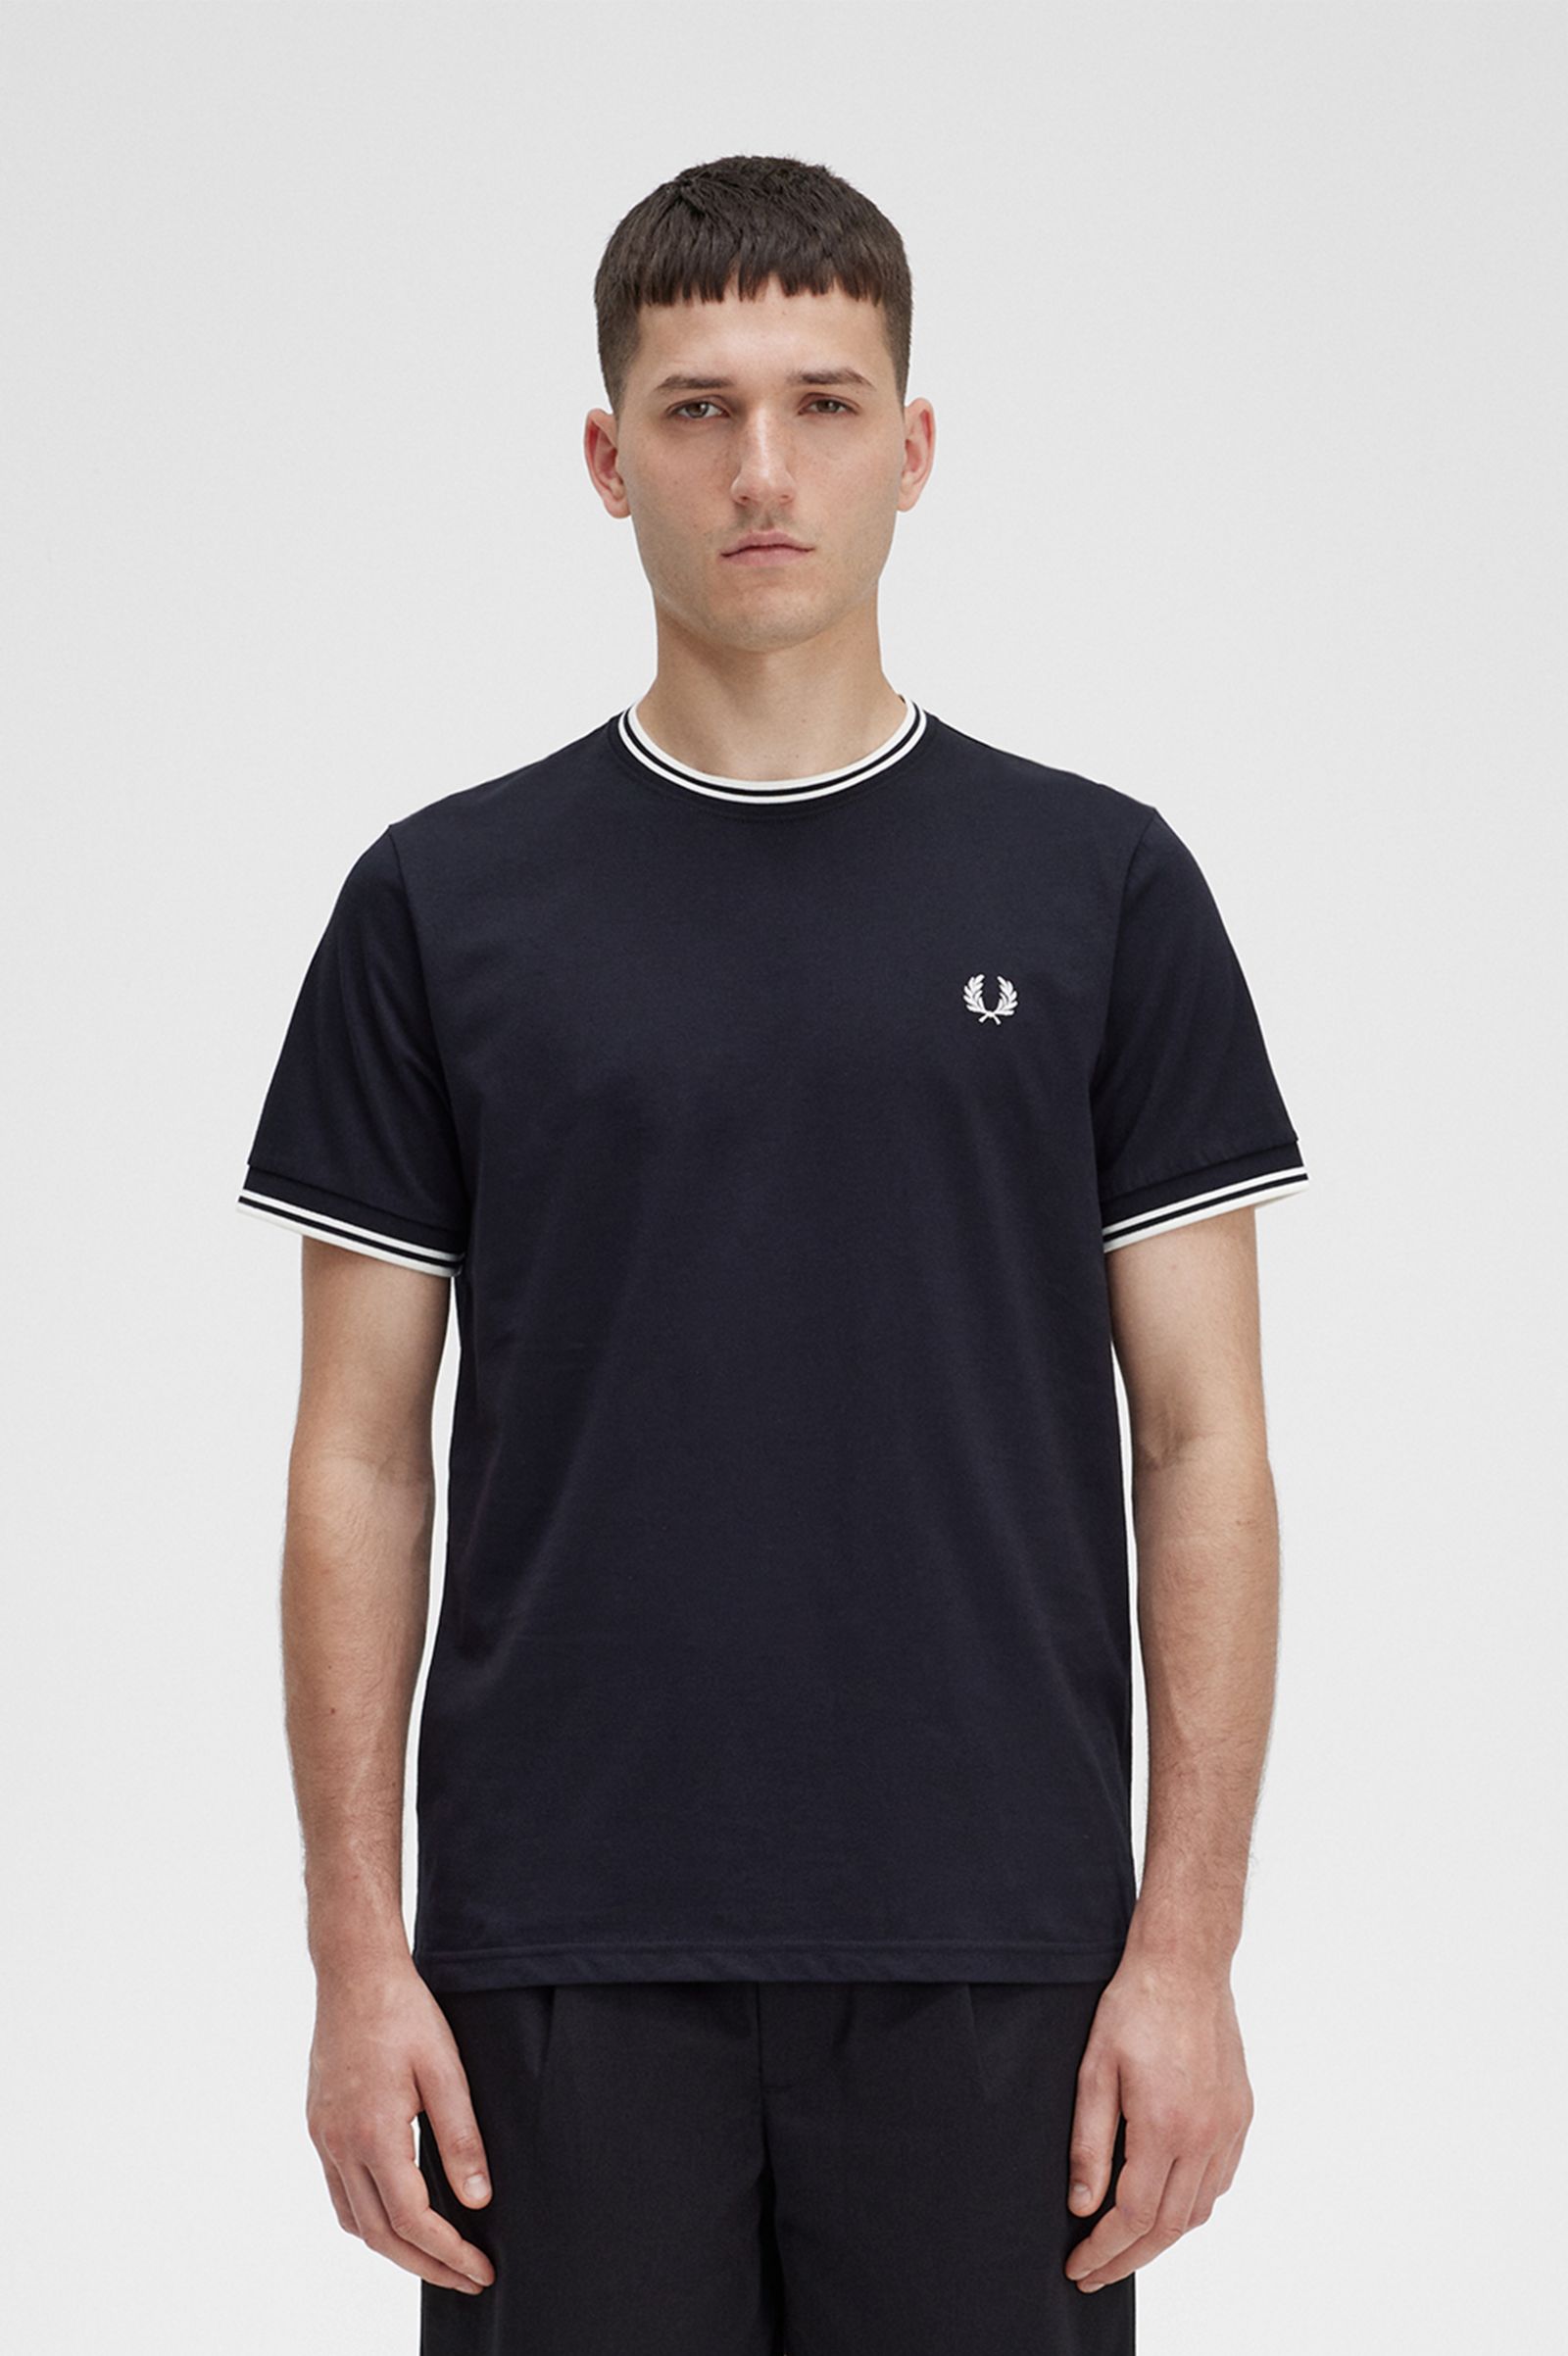 Twin Tipped T-Shirt - Black | Men's T-Shirts | Designer T-Shirts